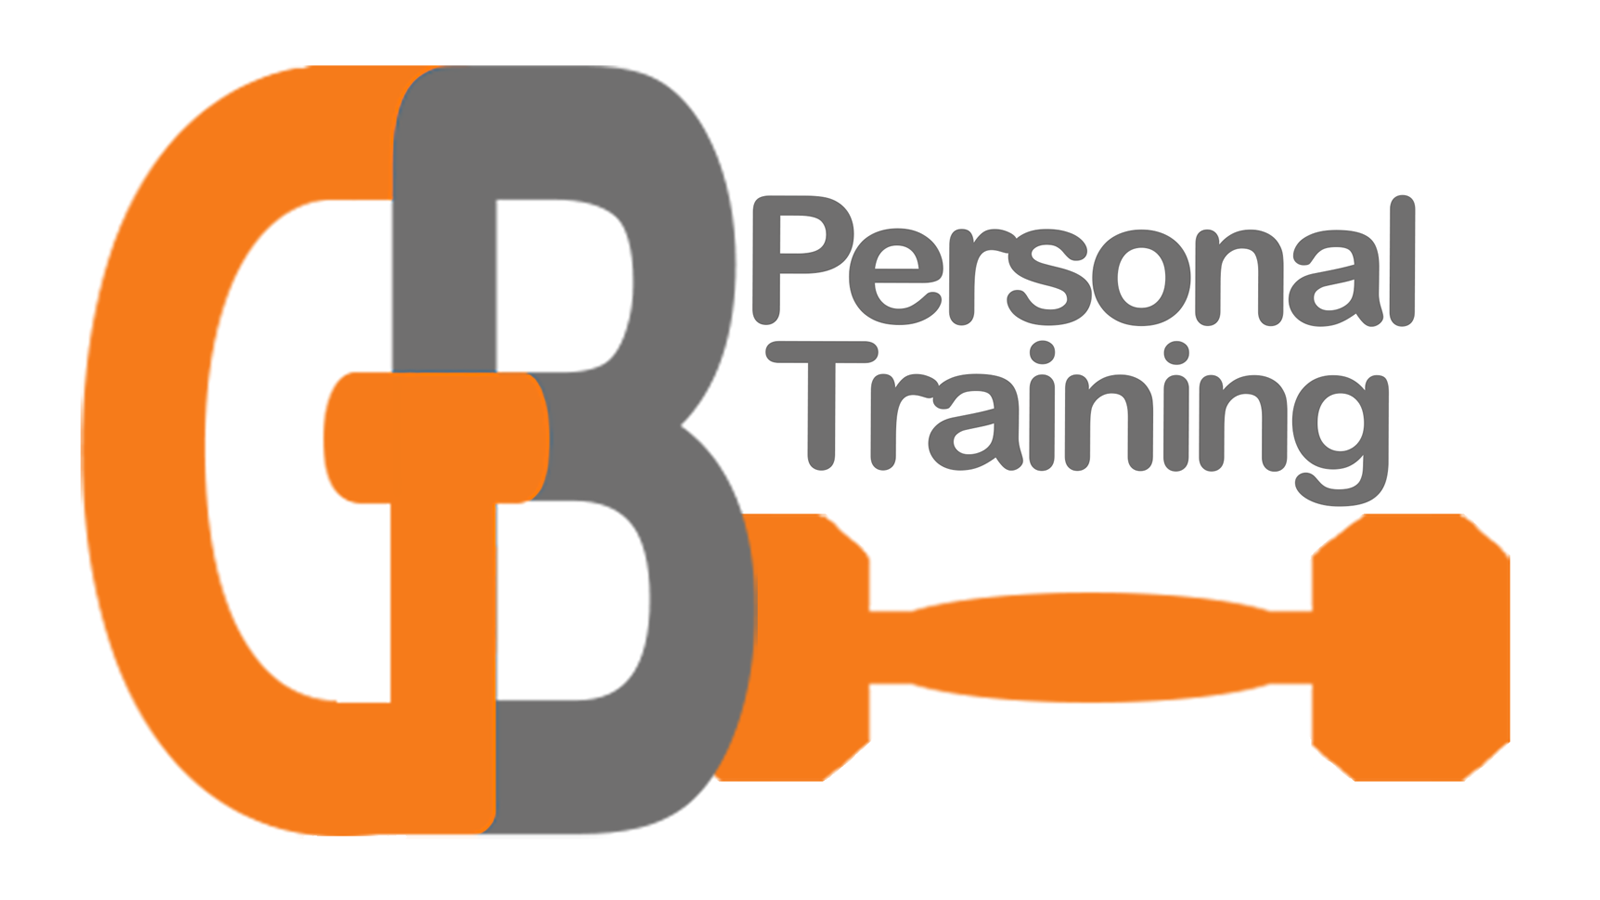 GB Personal Training